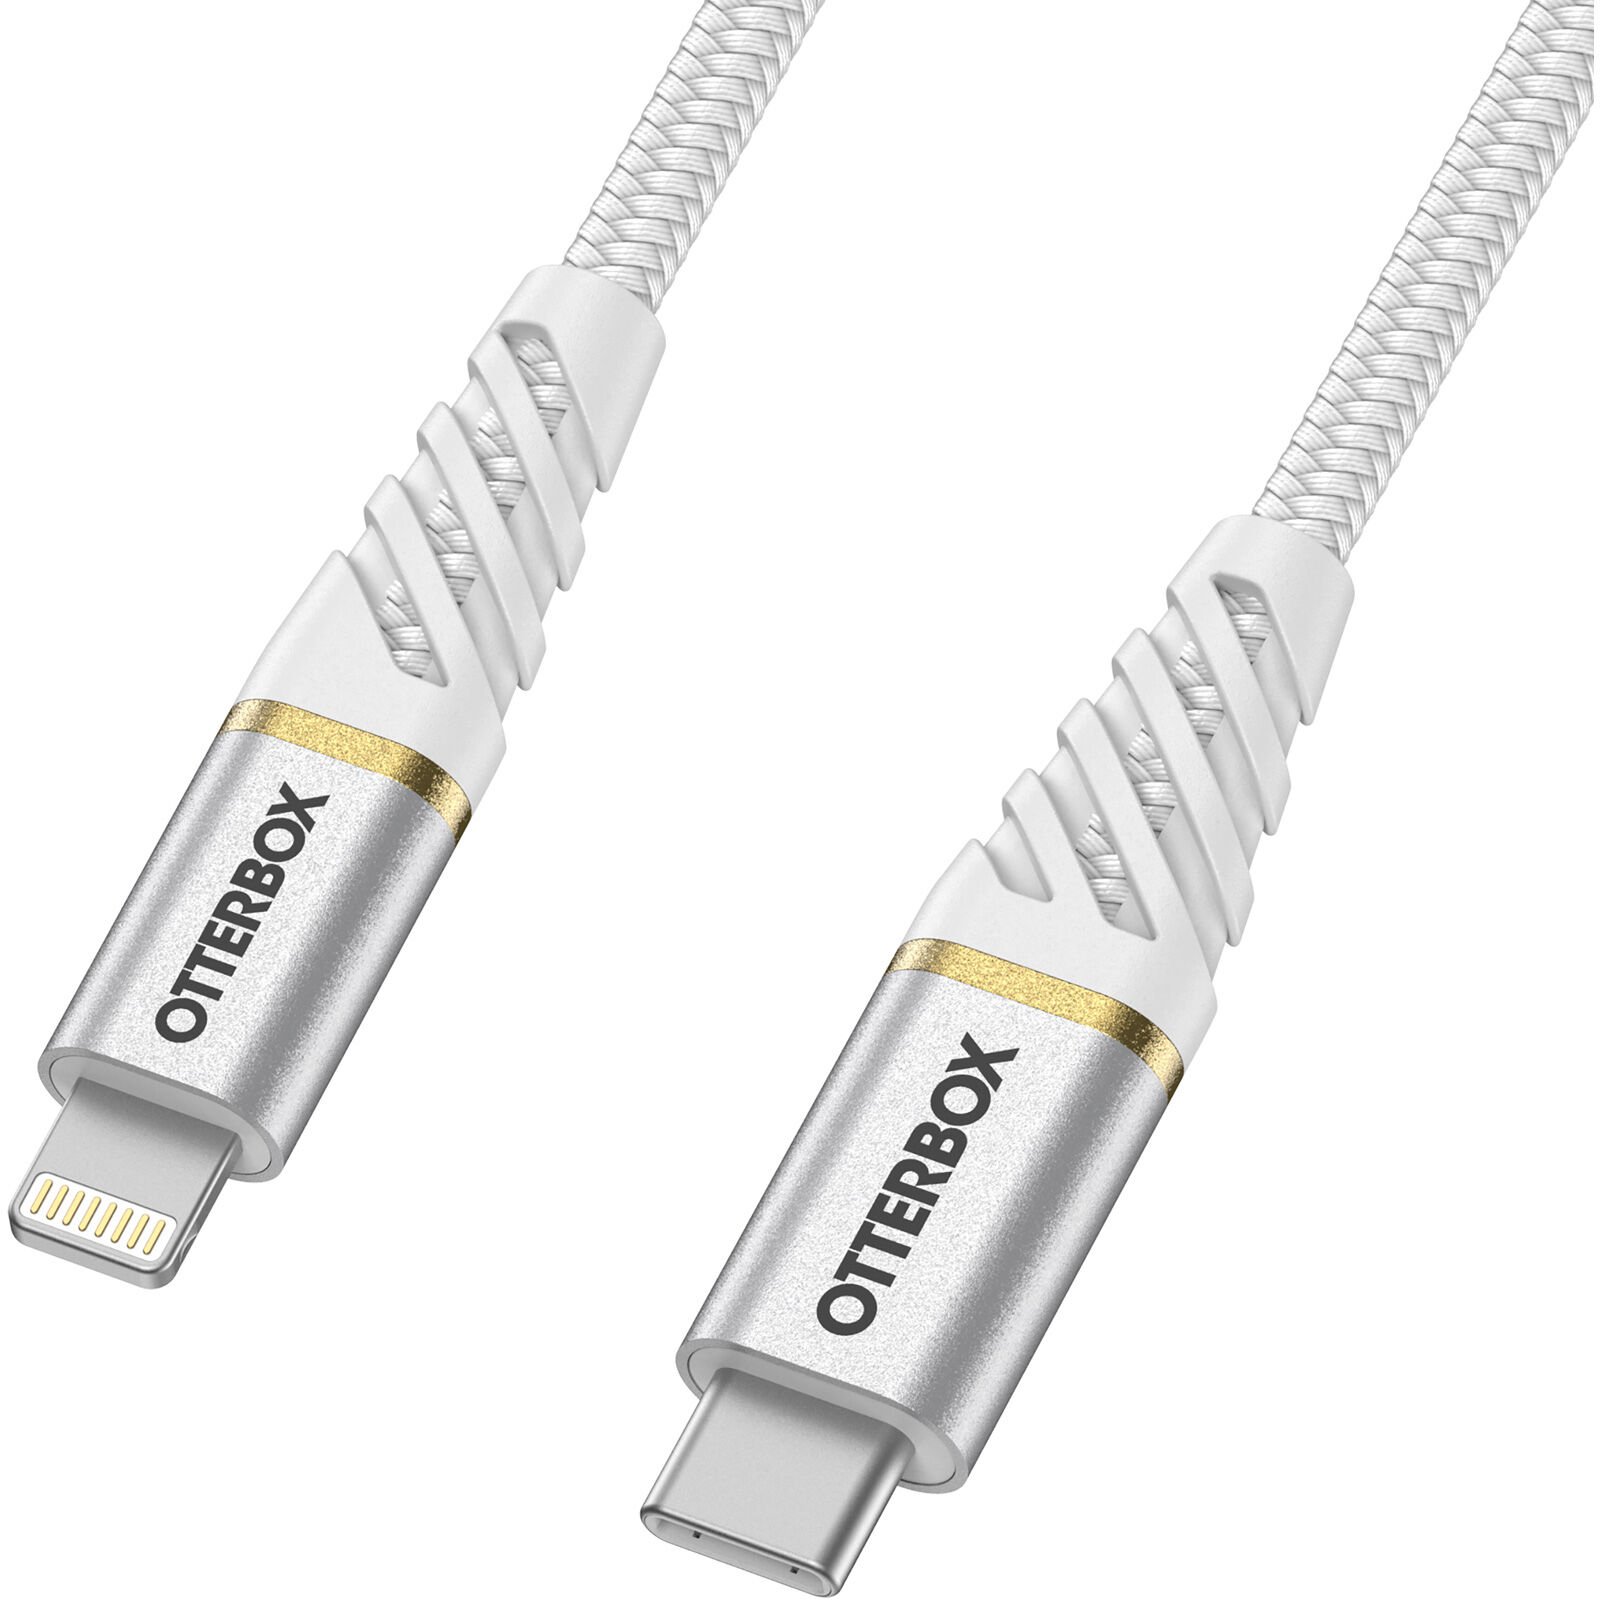 USB-C -> Lightning Kaapeli 1m Premium Fast Charge valkoinen